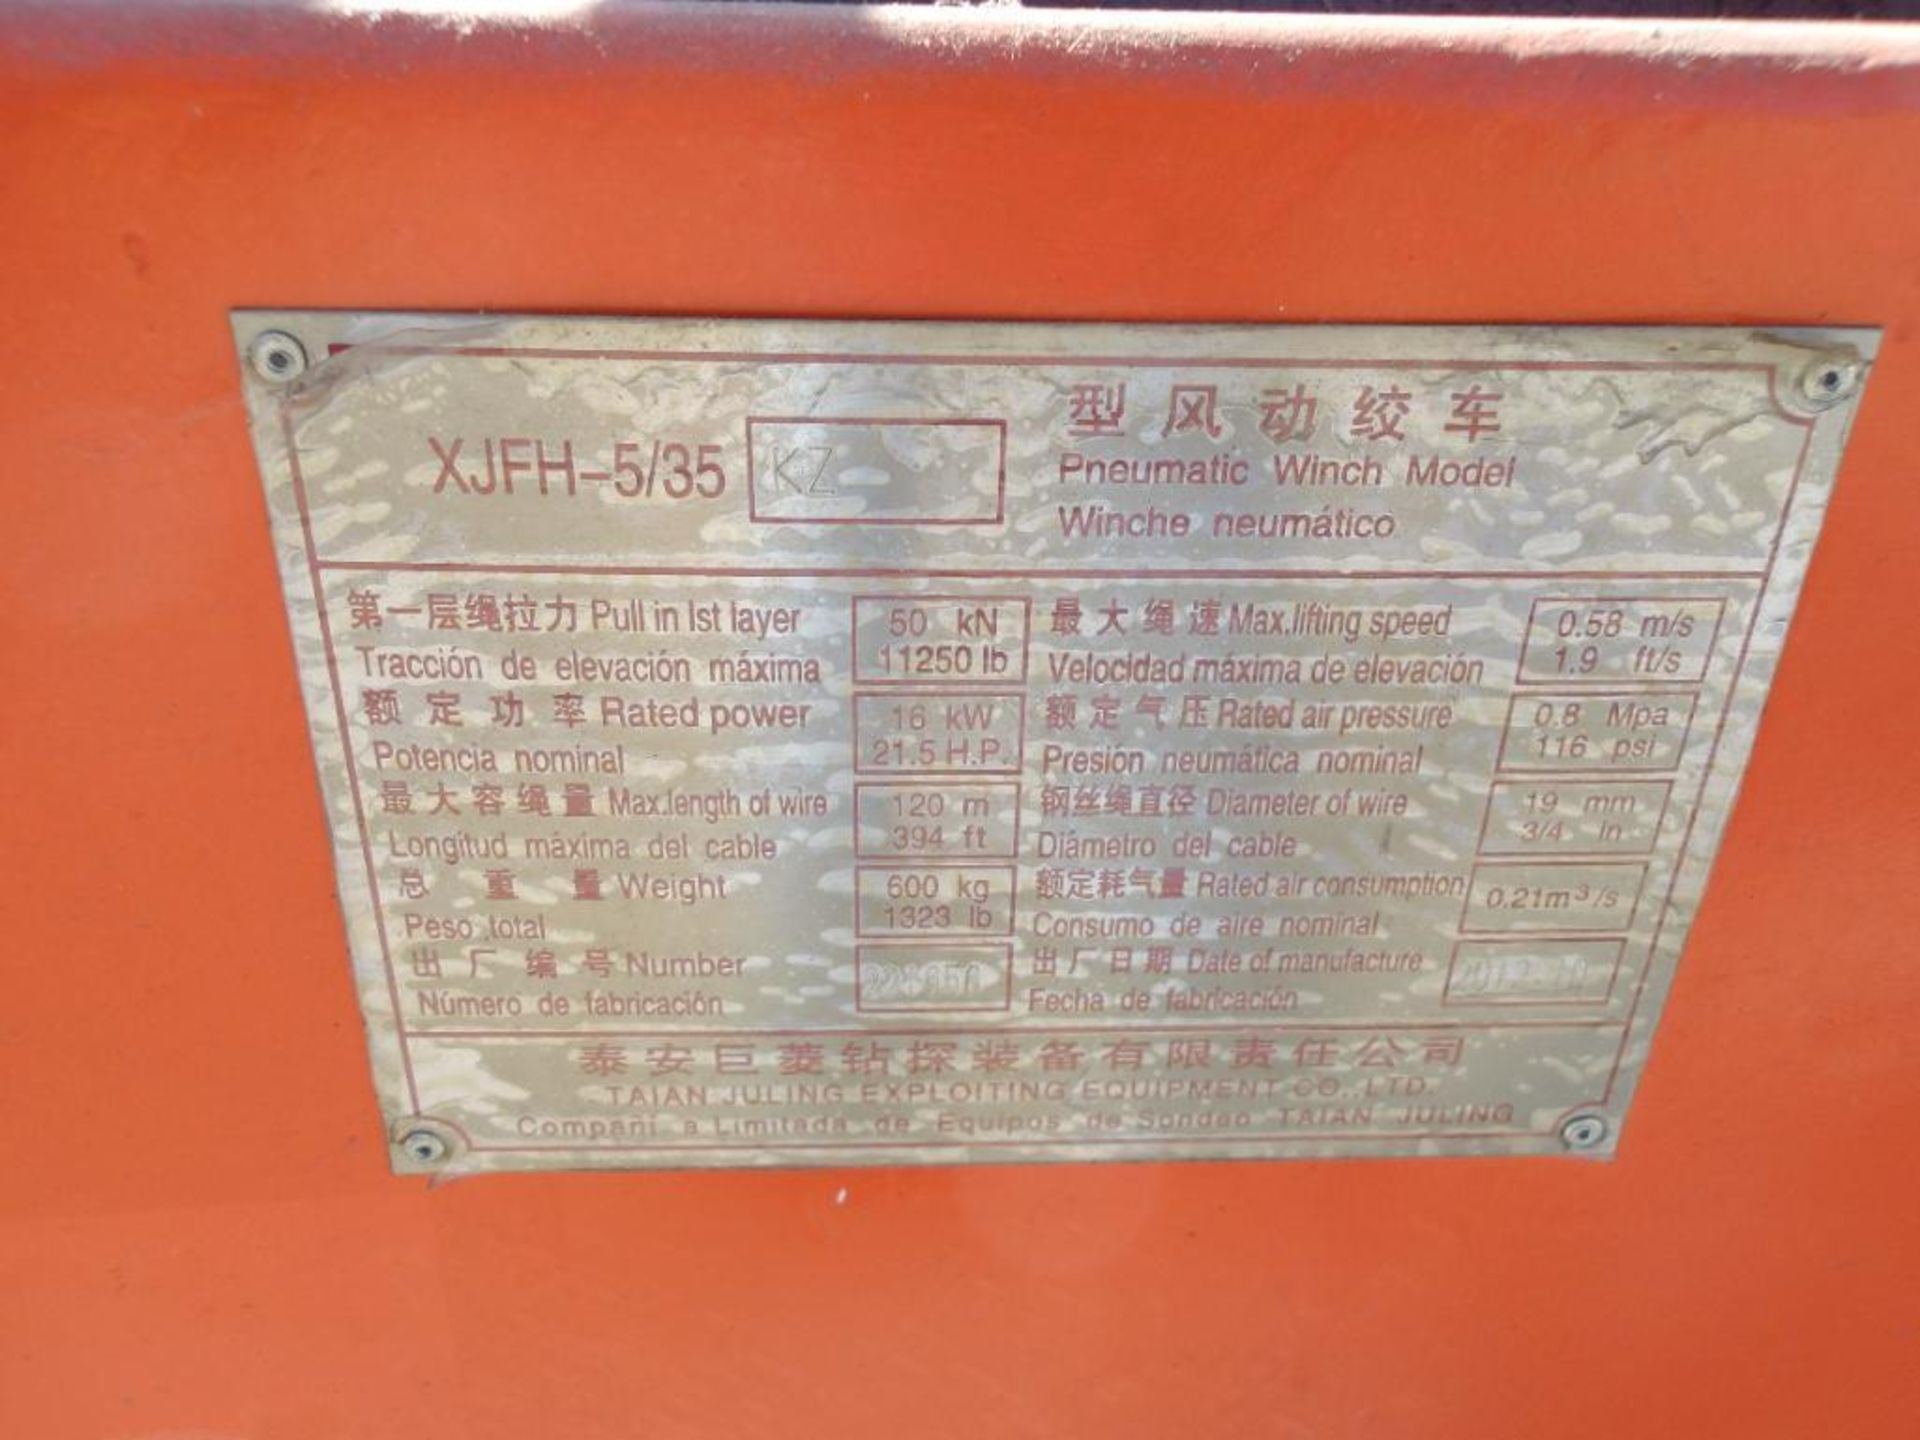 Taian Juling Pneumatic Winch, Model XJFH-5/35/221656-K7 (New) - Image 4 of 4